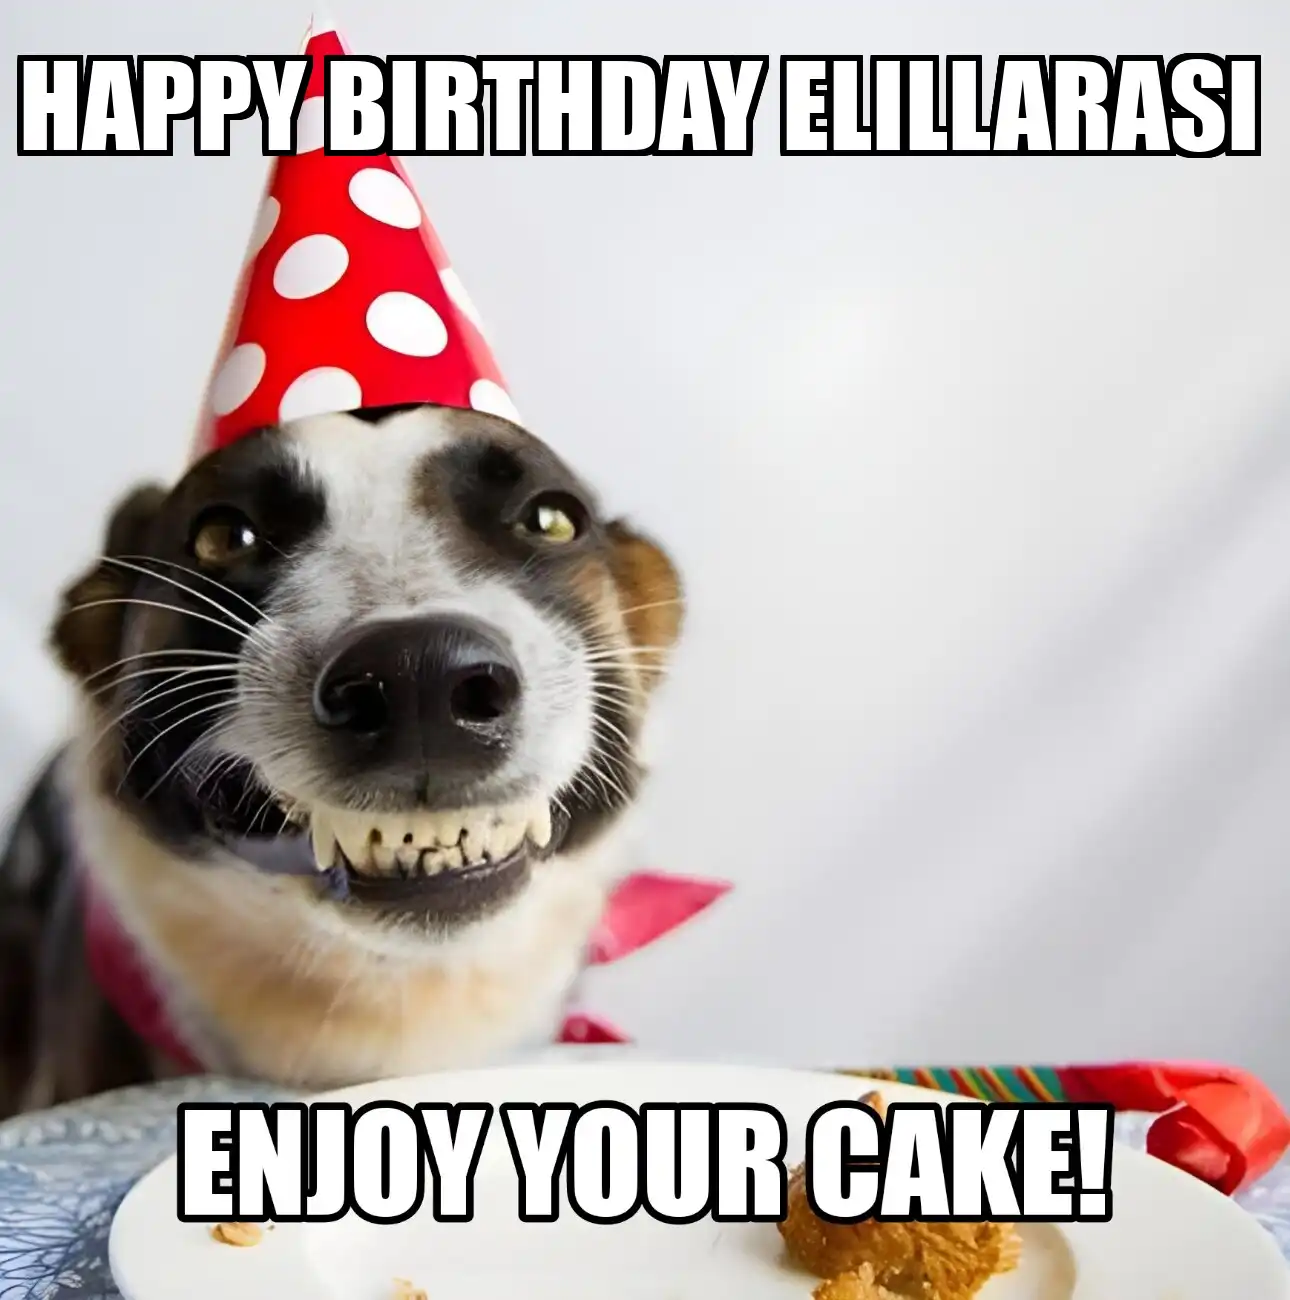 Happy Birthday Elillarasi Enjoy Your Cake Dog Meme